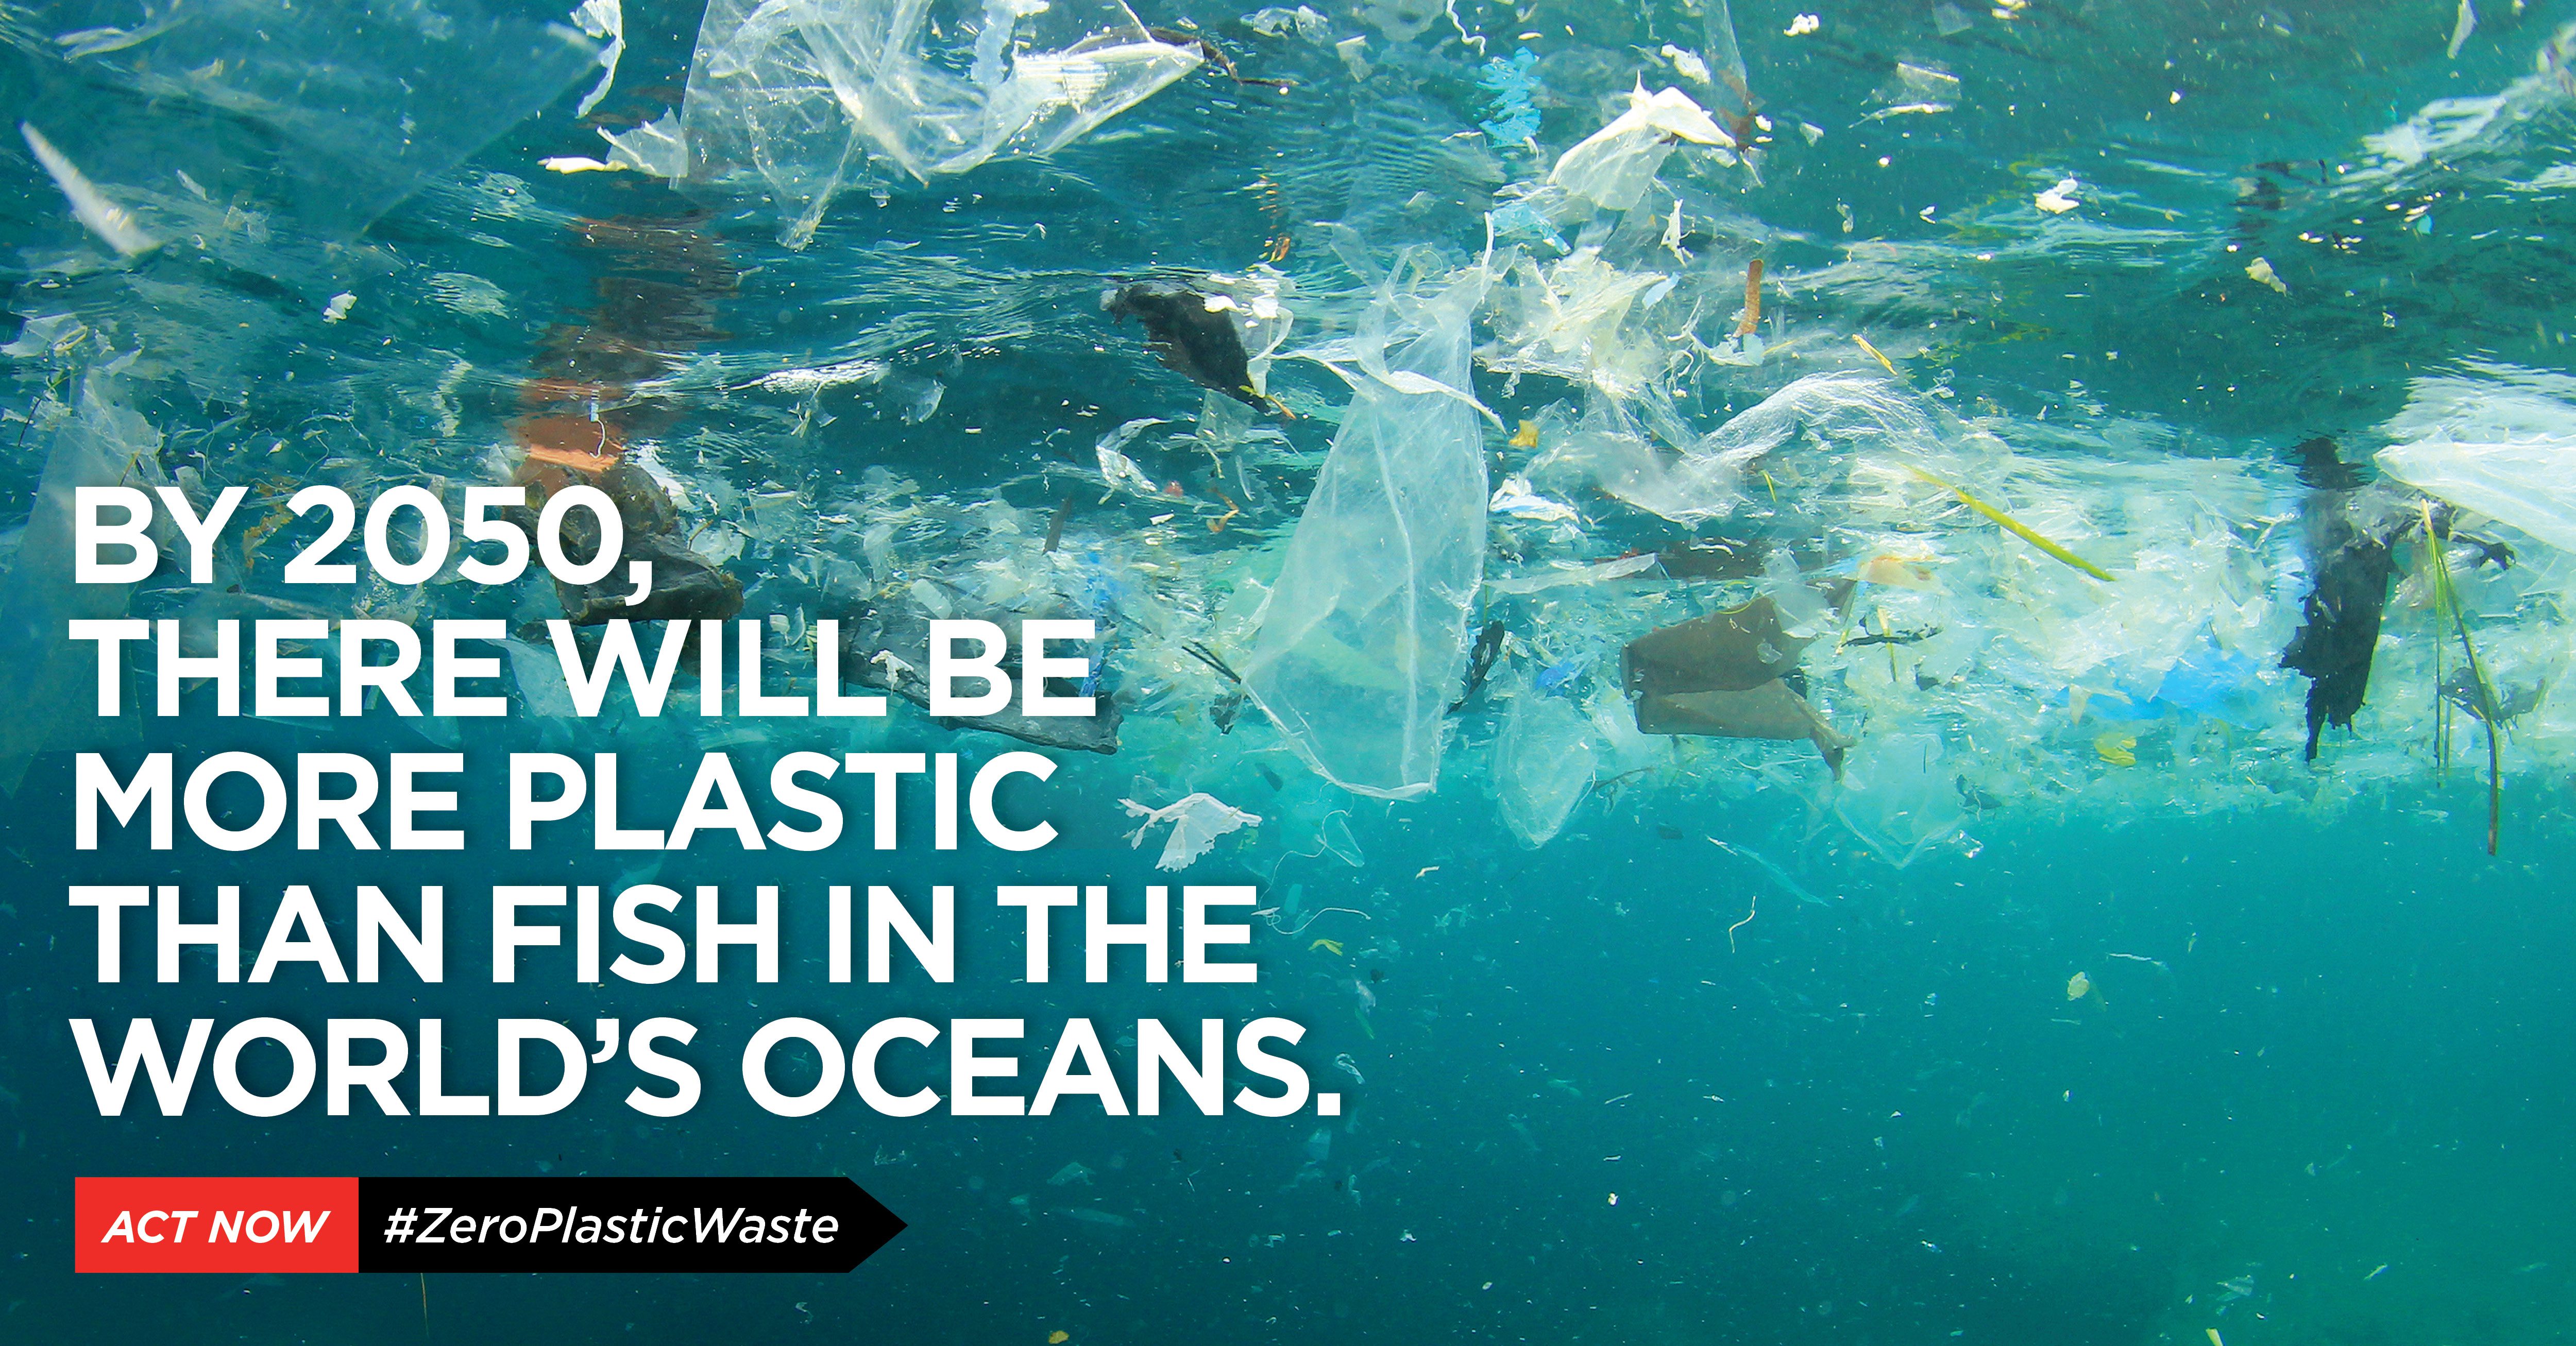 more plastic than fish in oceans